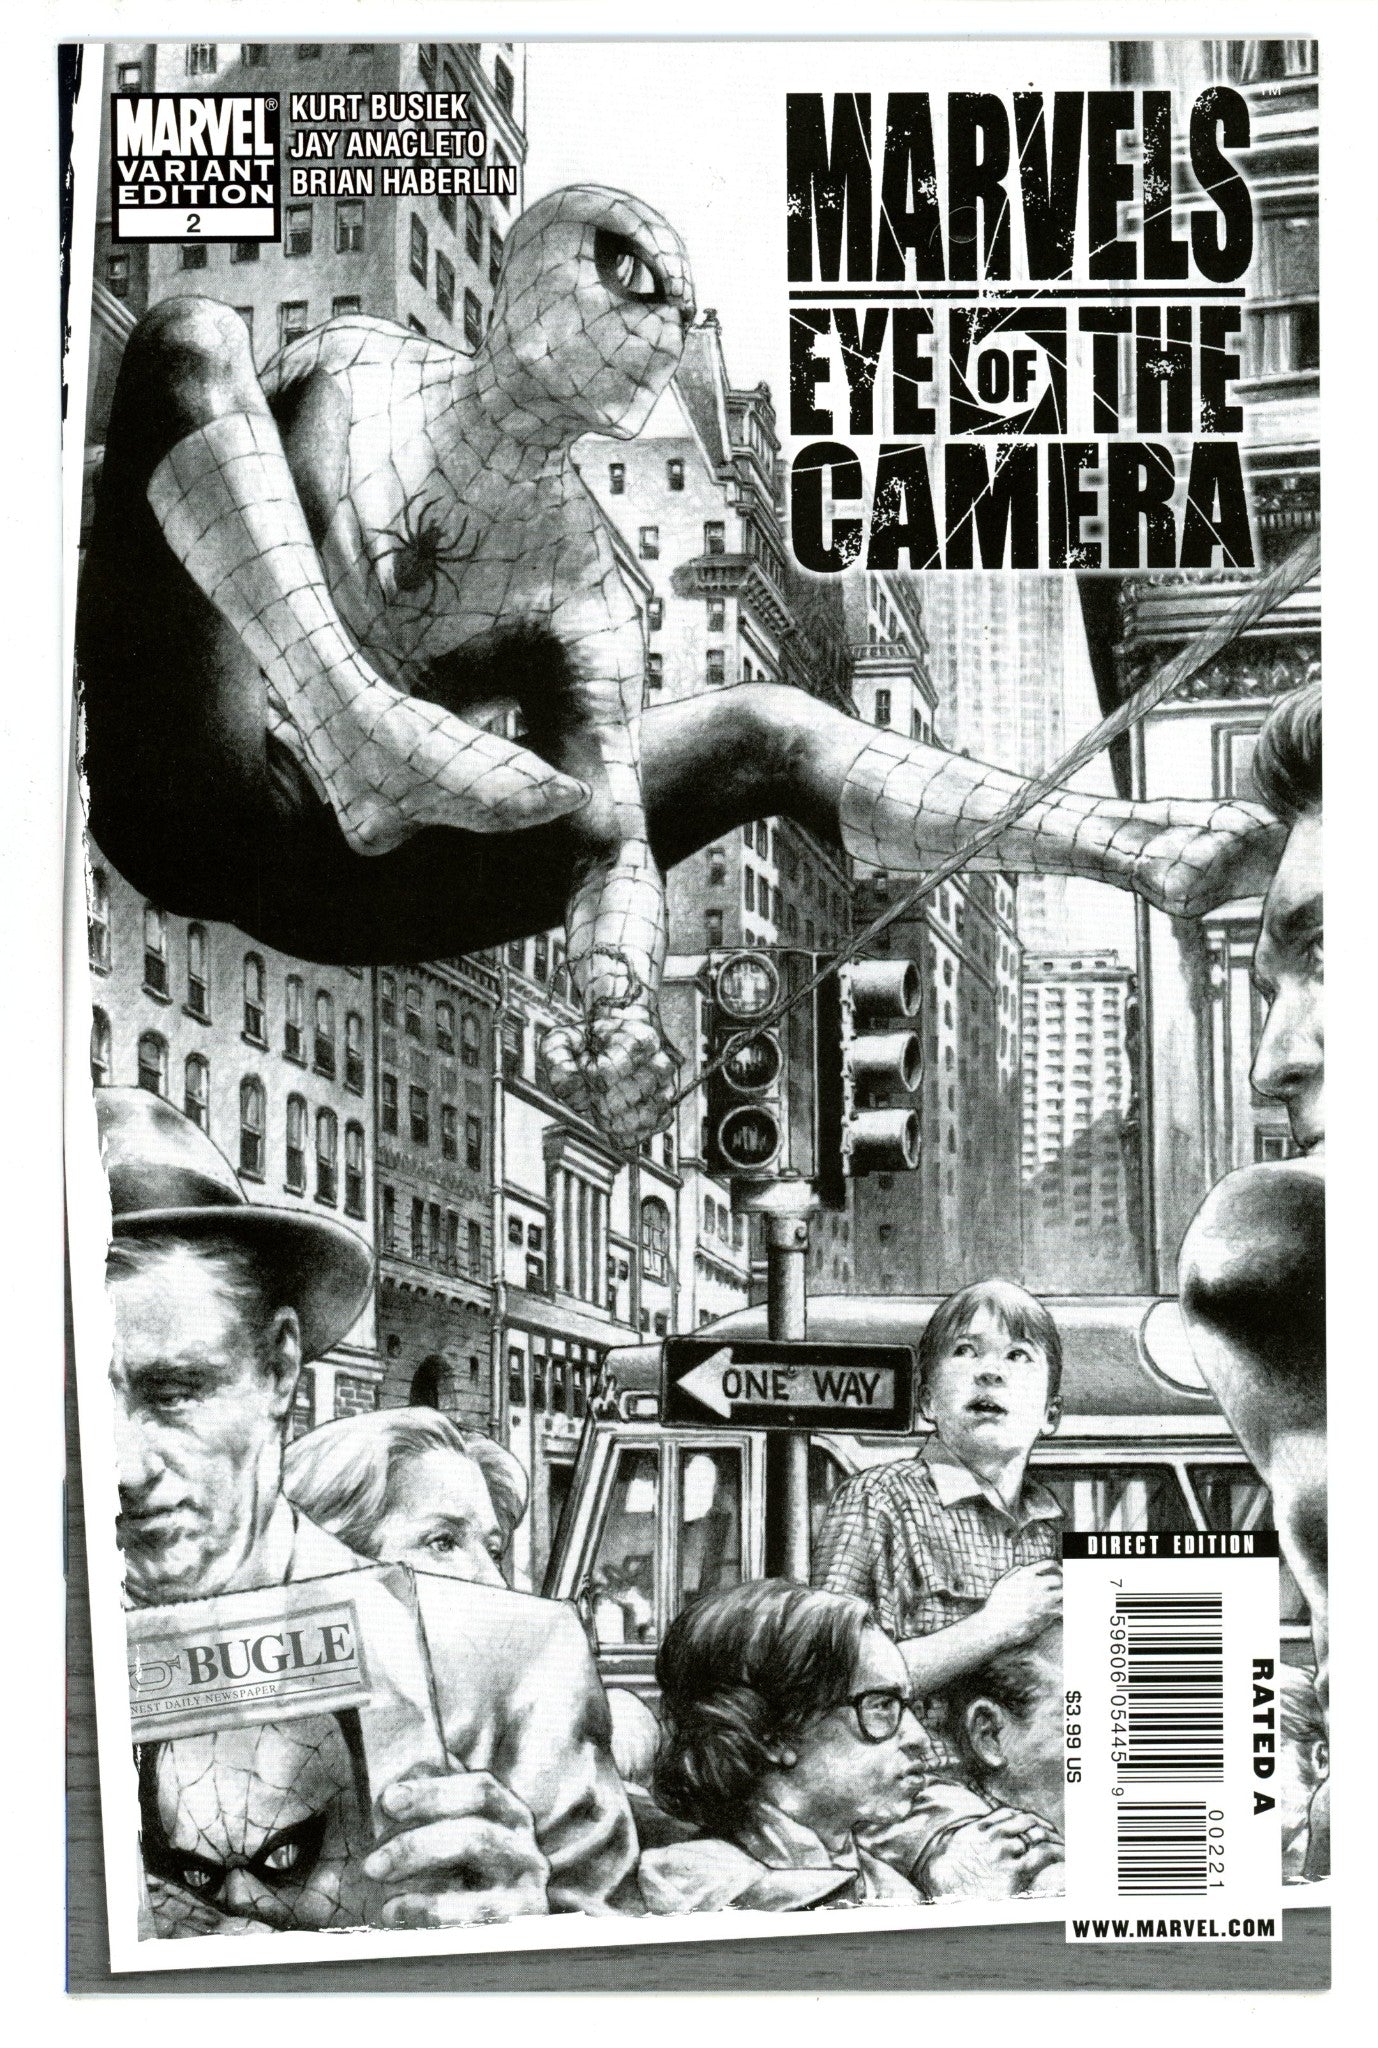 Marvels: Eye of the Camera 2 High Grade (2009) Anacleto B&W Variant 